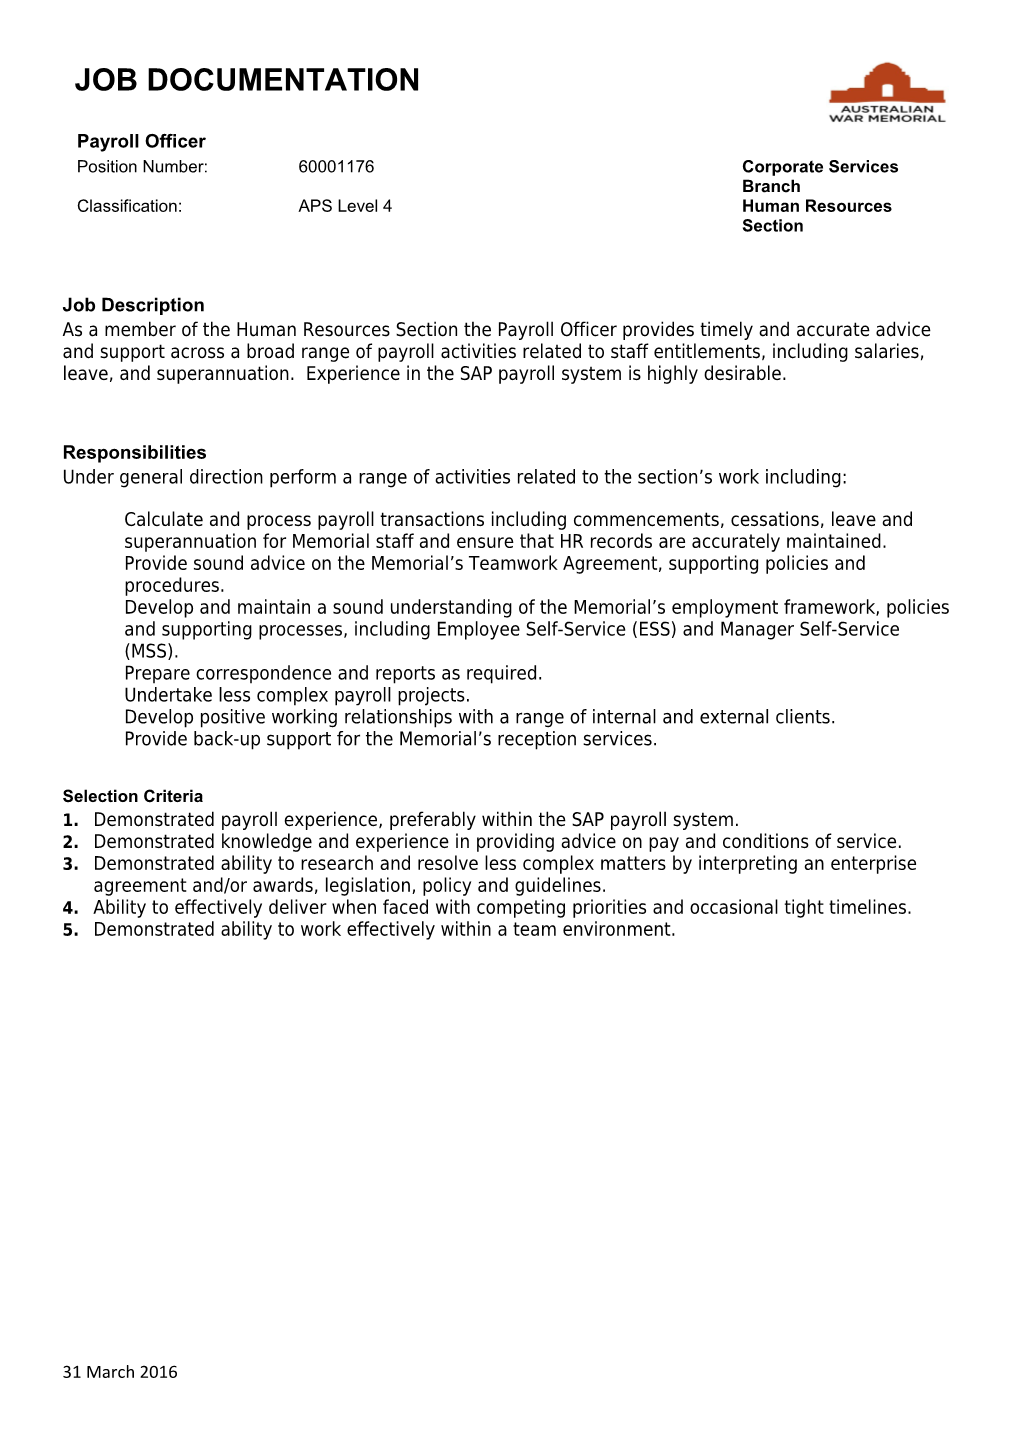 JOB DOCUMENTATION - APS 4 - Payroll Officer - 60001176 - March 2016